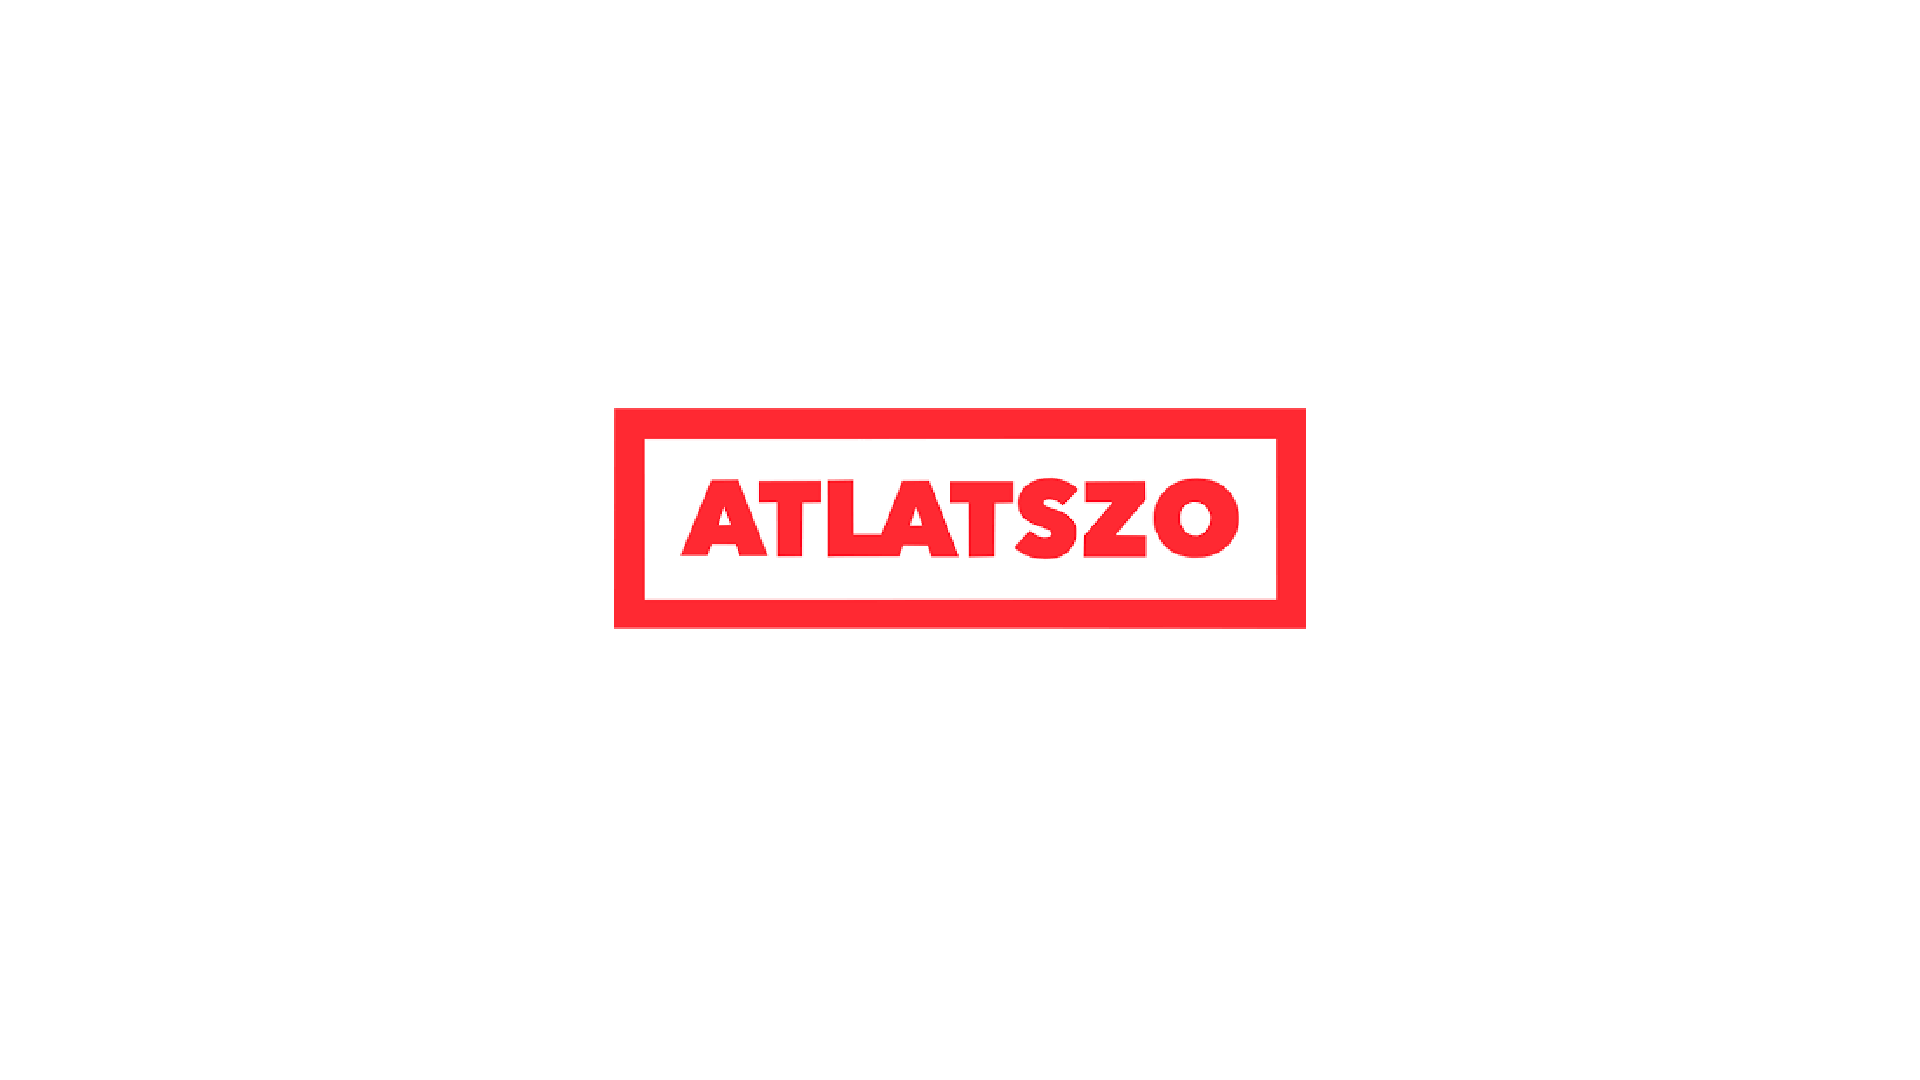 Atlatszo - Online spot about a non-profit organization